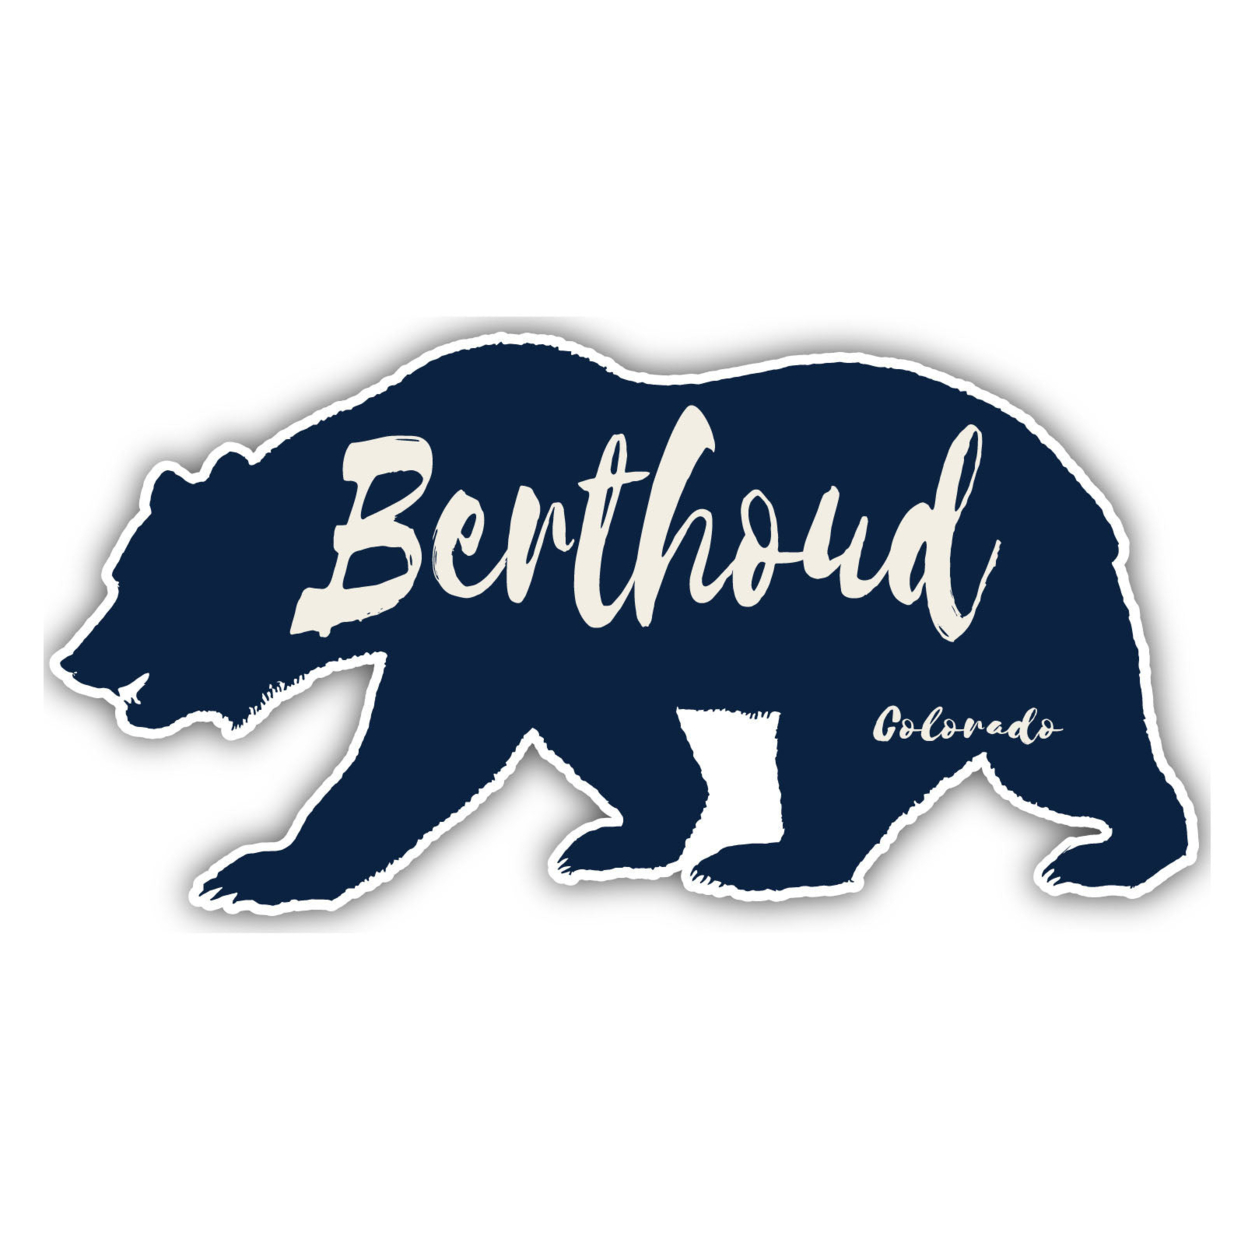 Berthoud Colorado Souvenir Decorative Stickers (Choose Theme And Size) - 4-Pack, 4-Inch, Tent